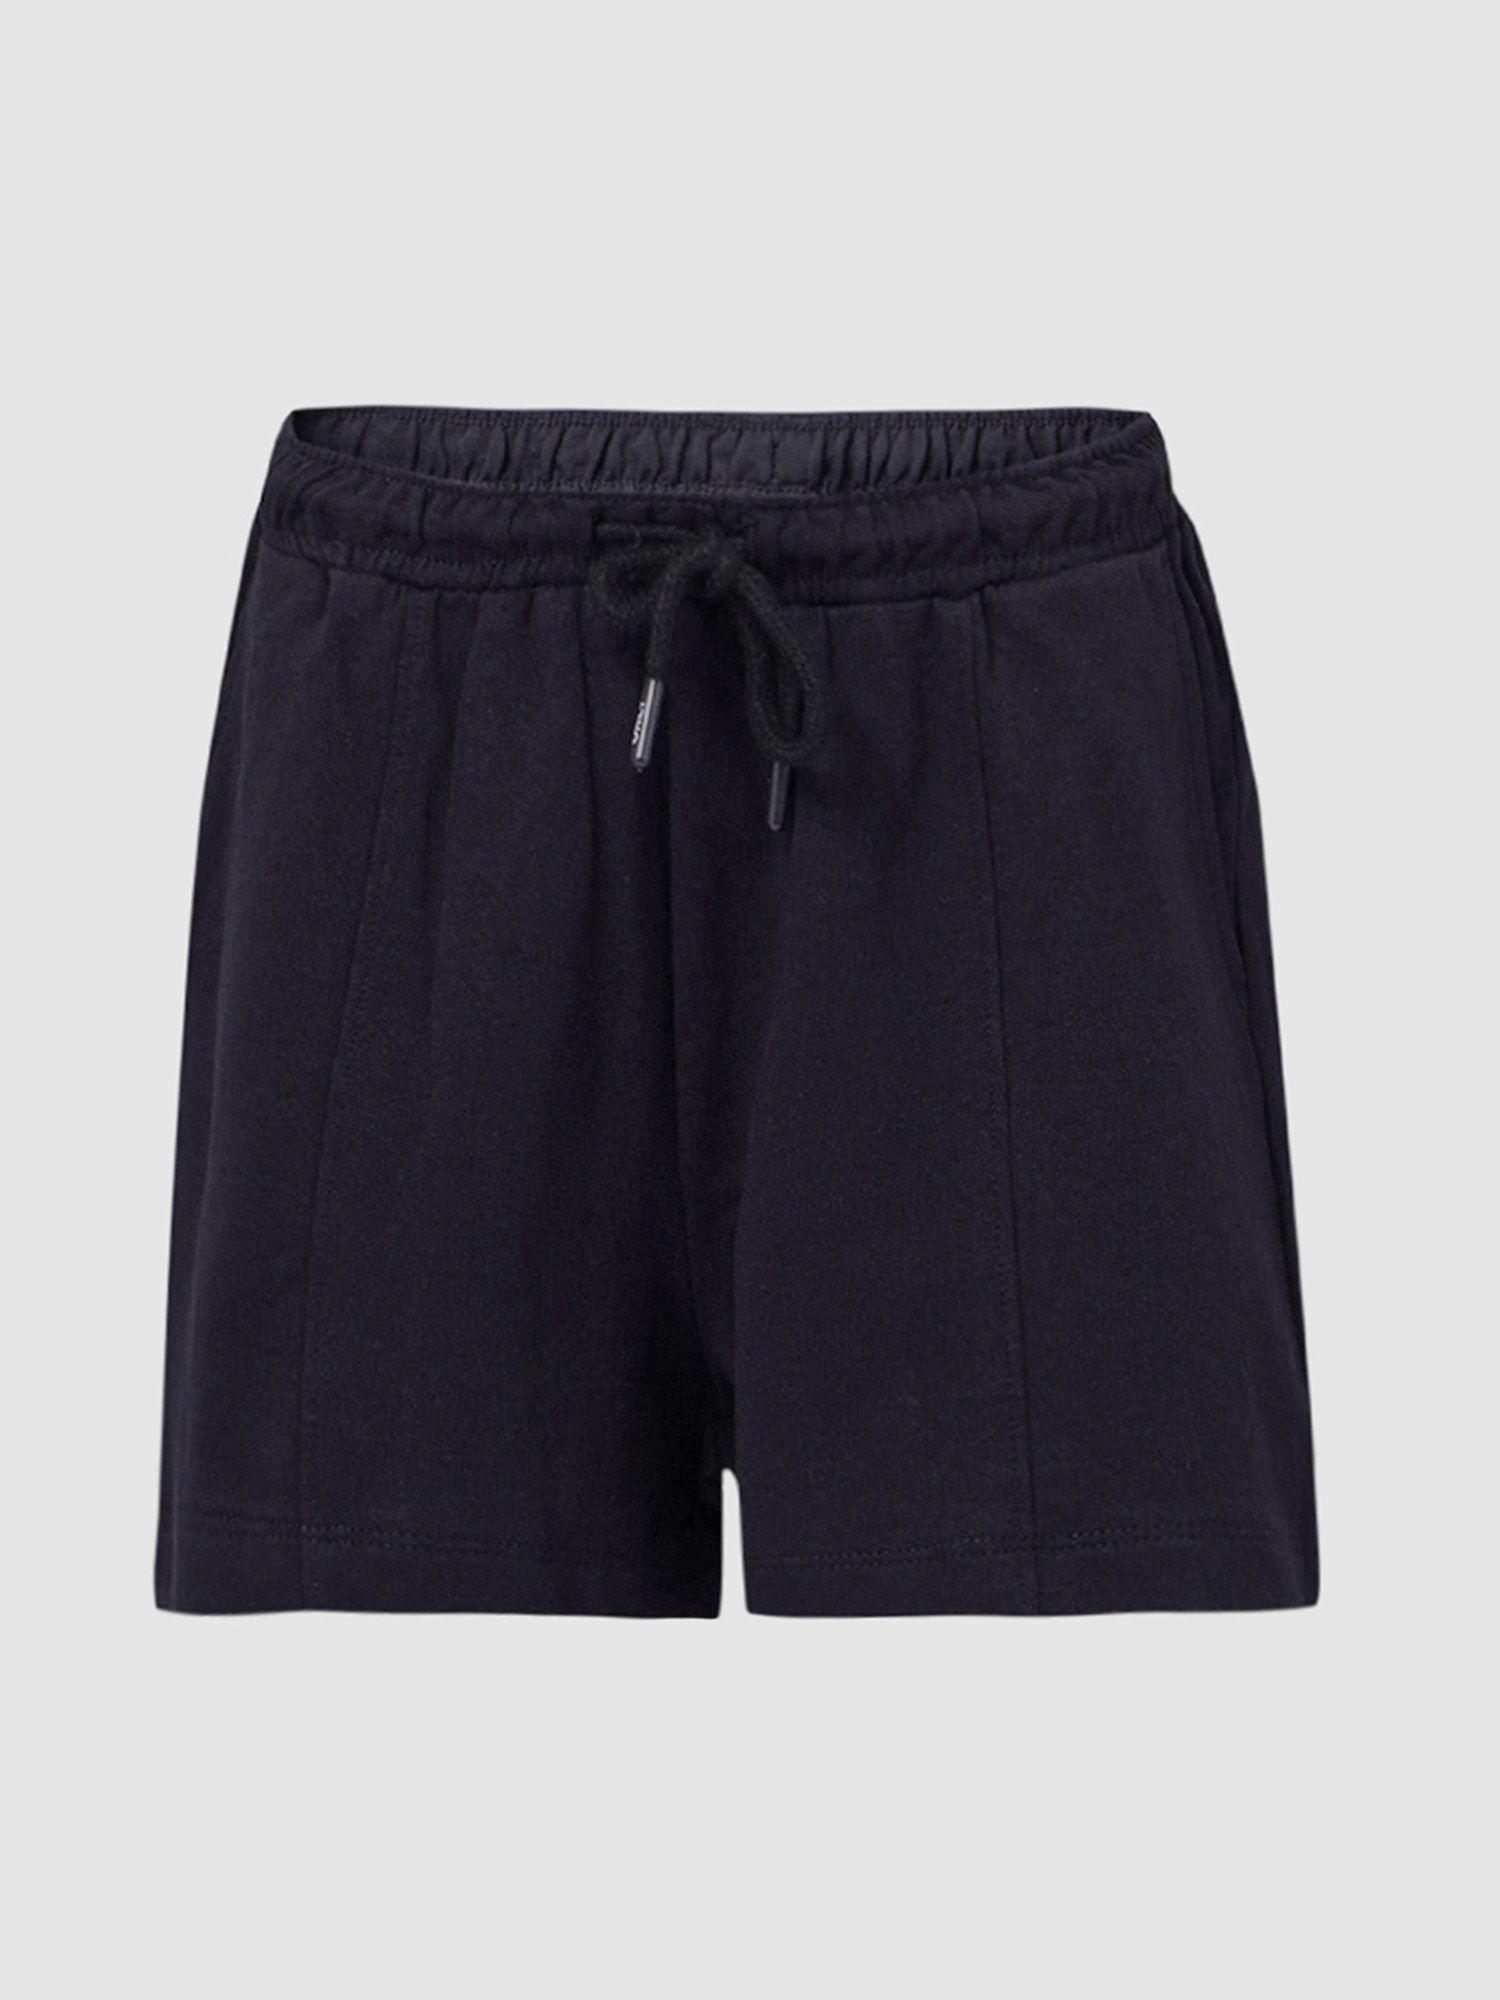 black konkitty shorts jrs